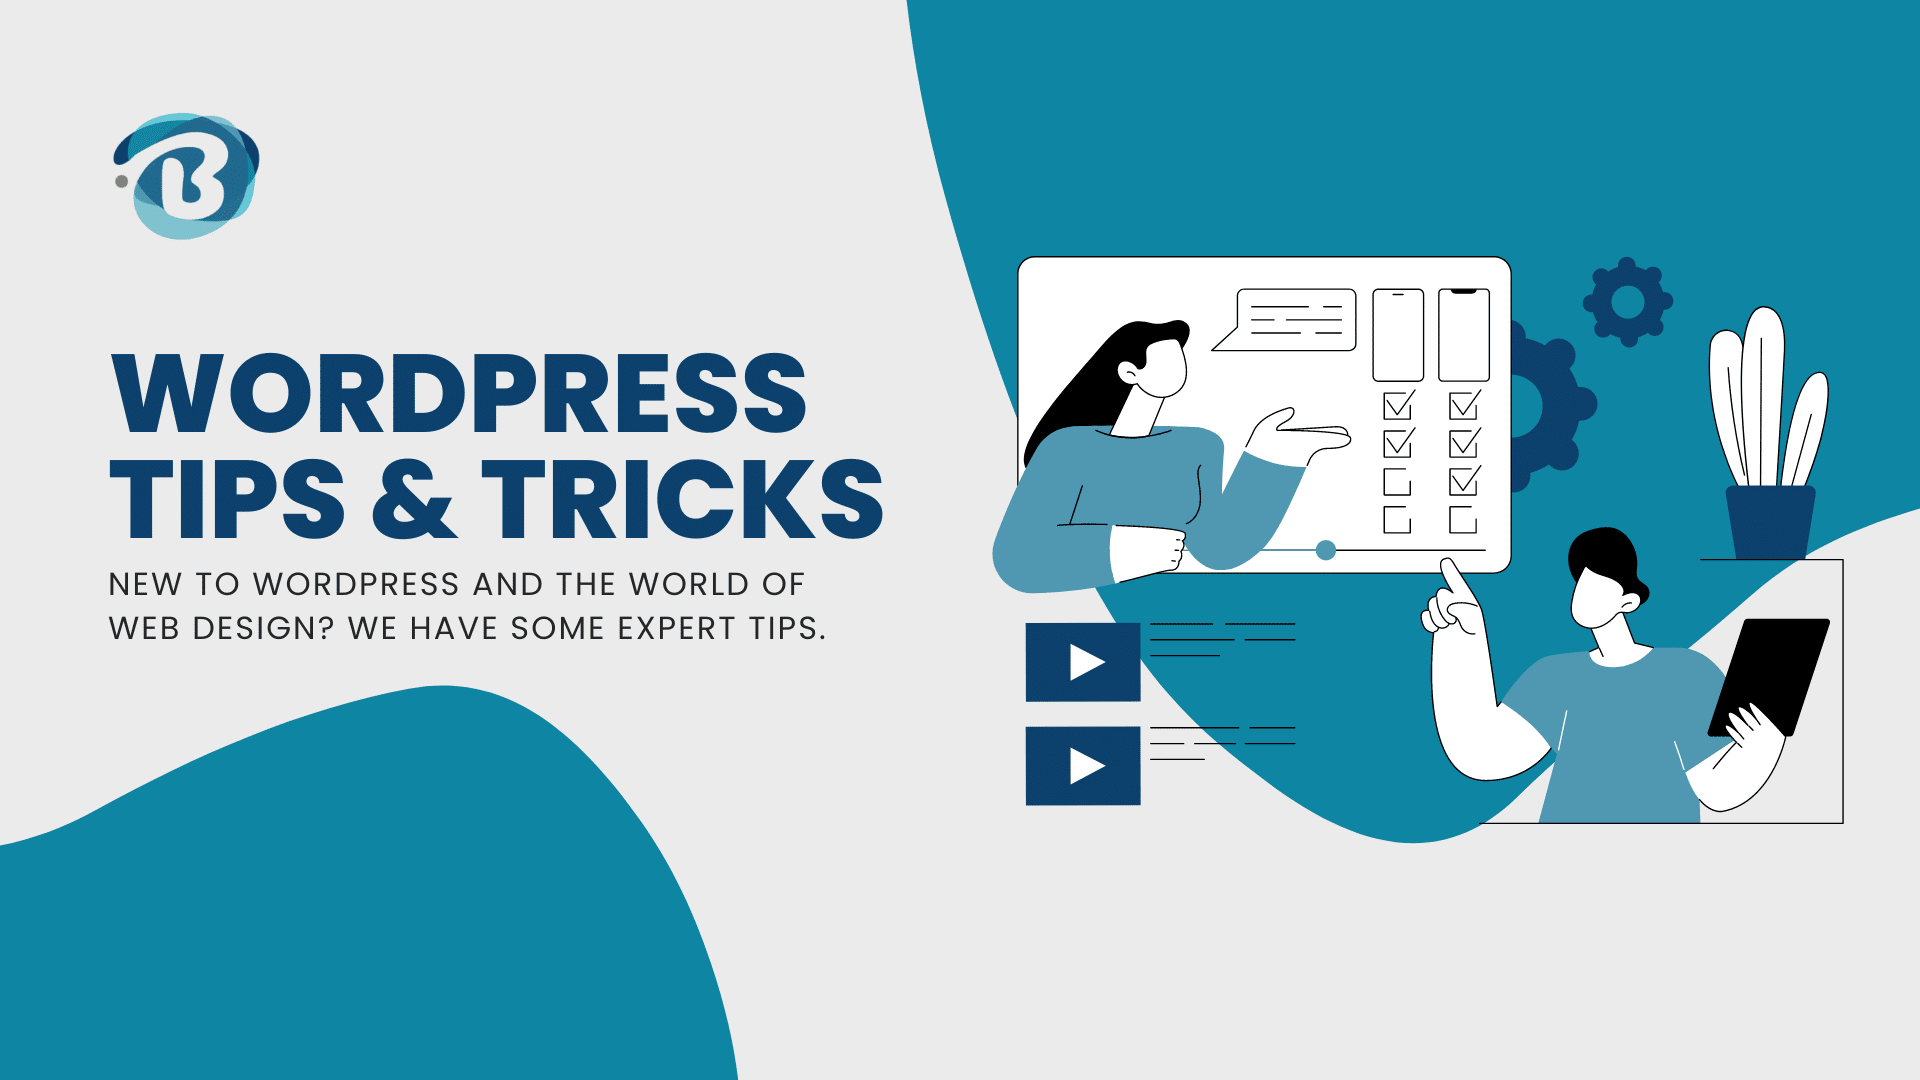 WordPress tips and tricks